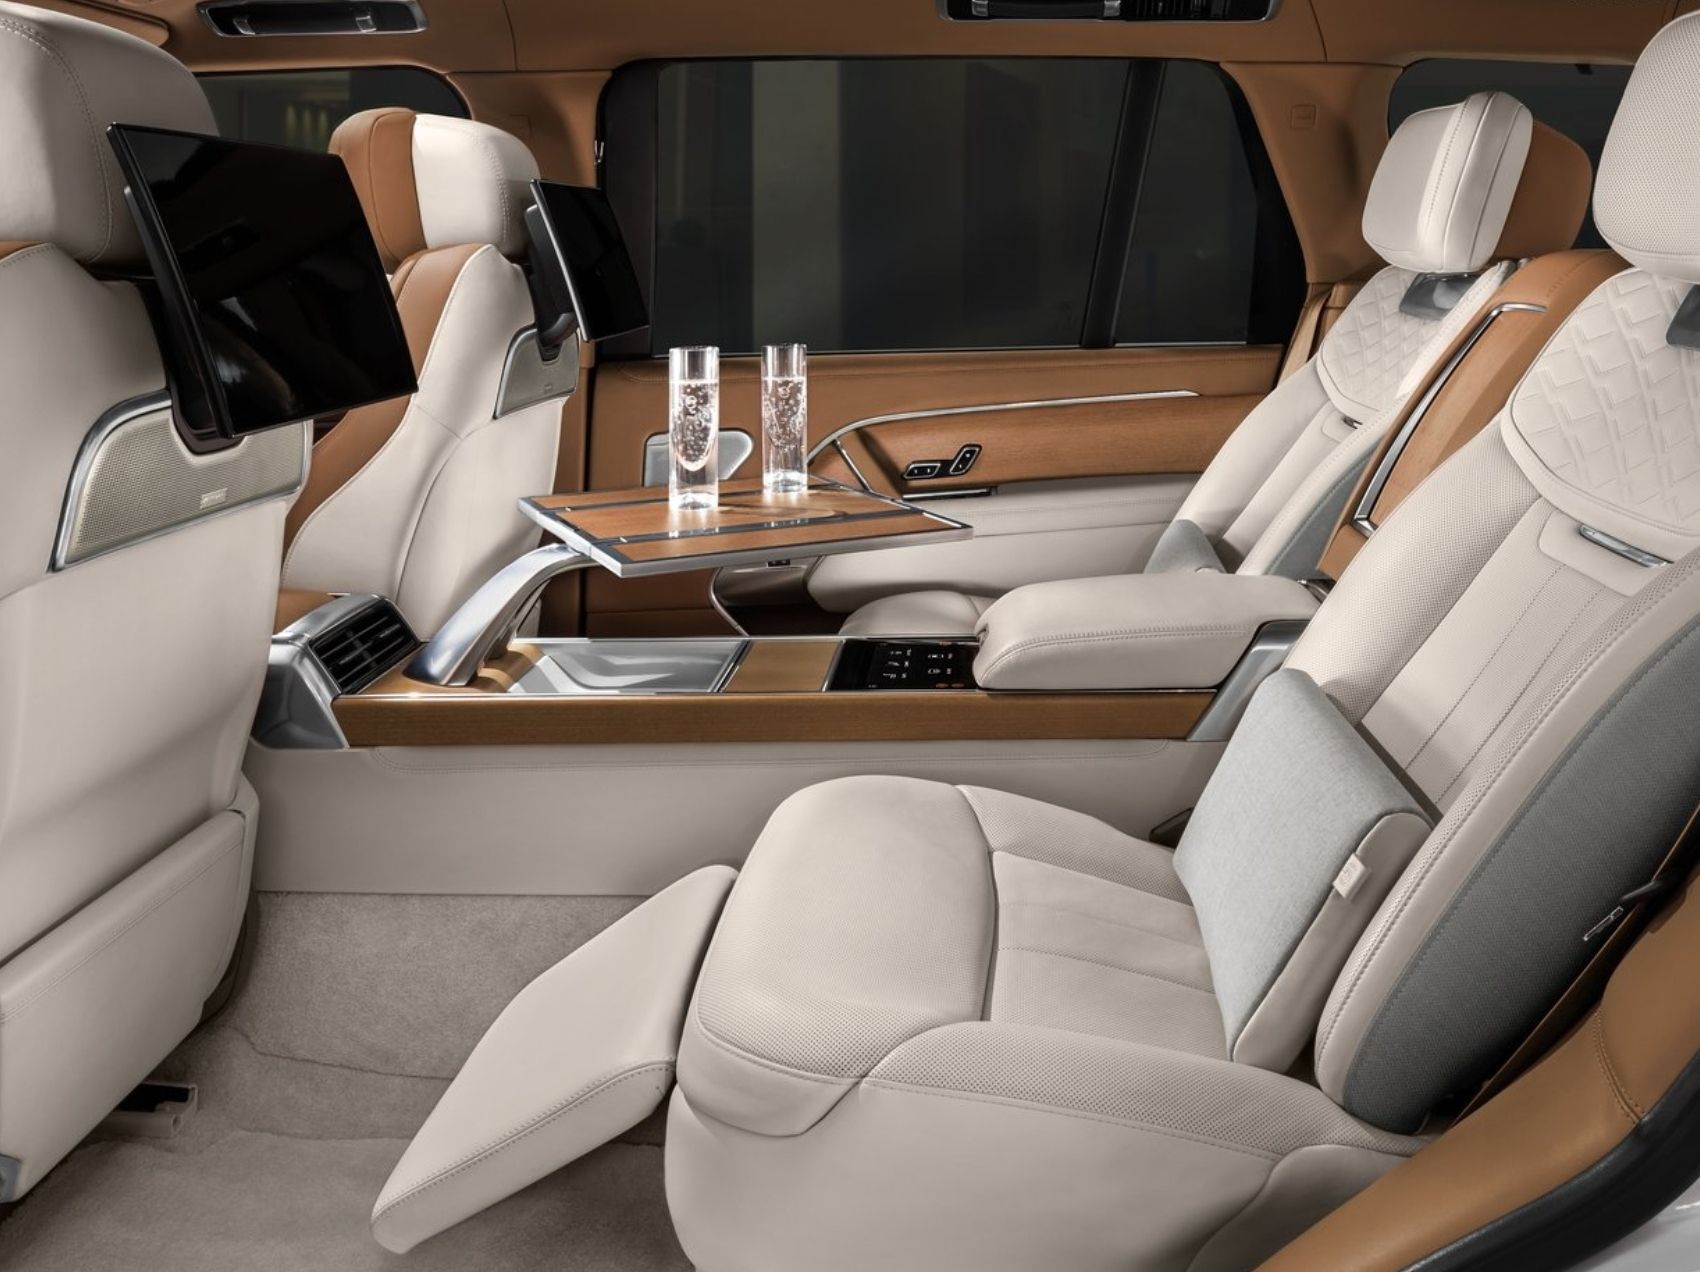 Range Rover SV LWB rear seats